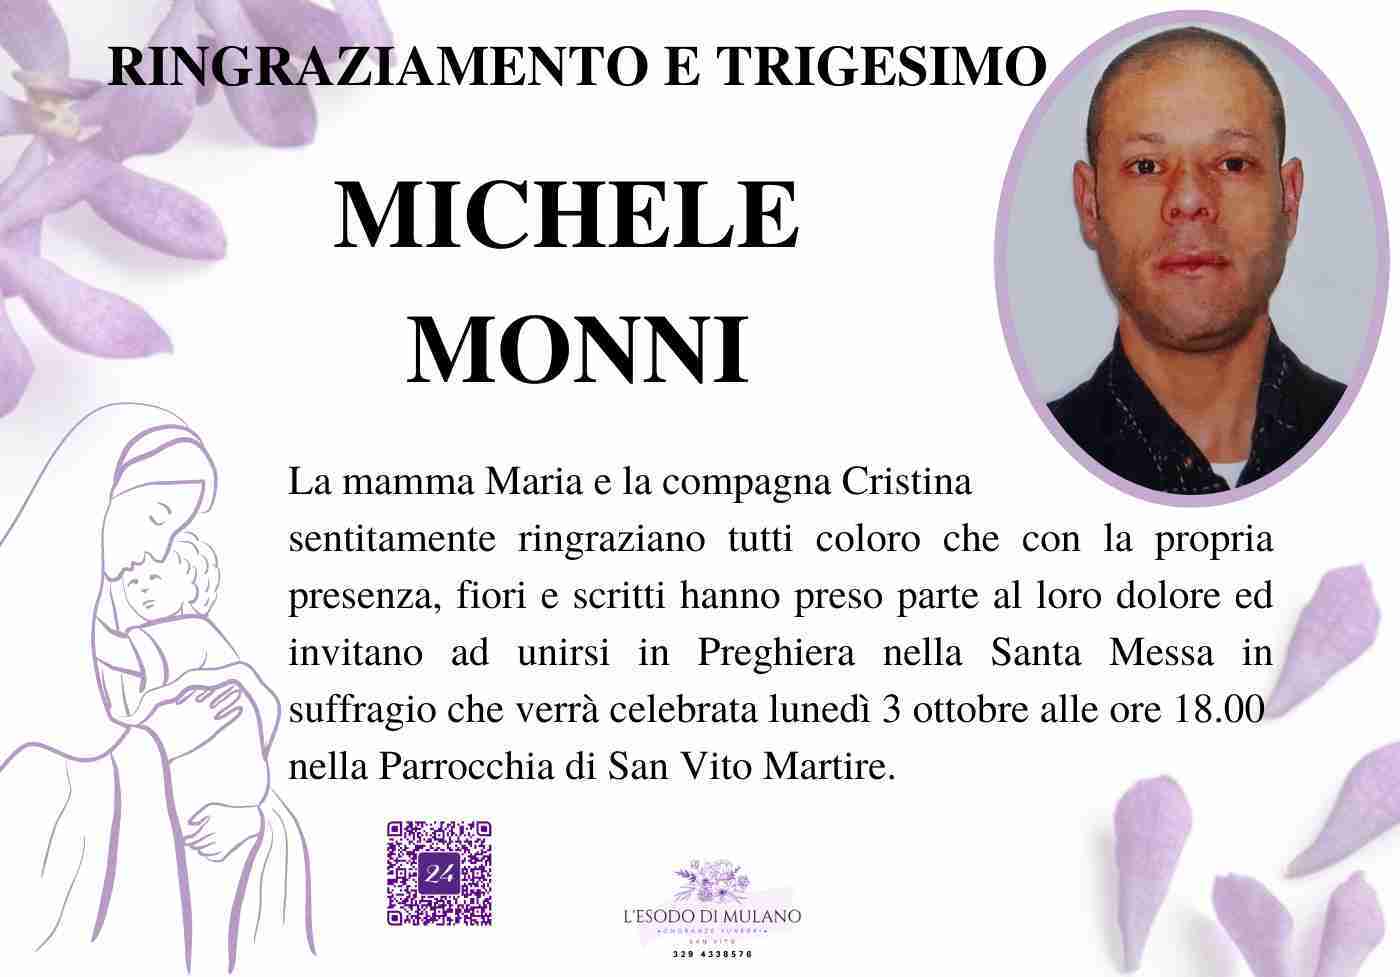 Michele Monni